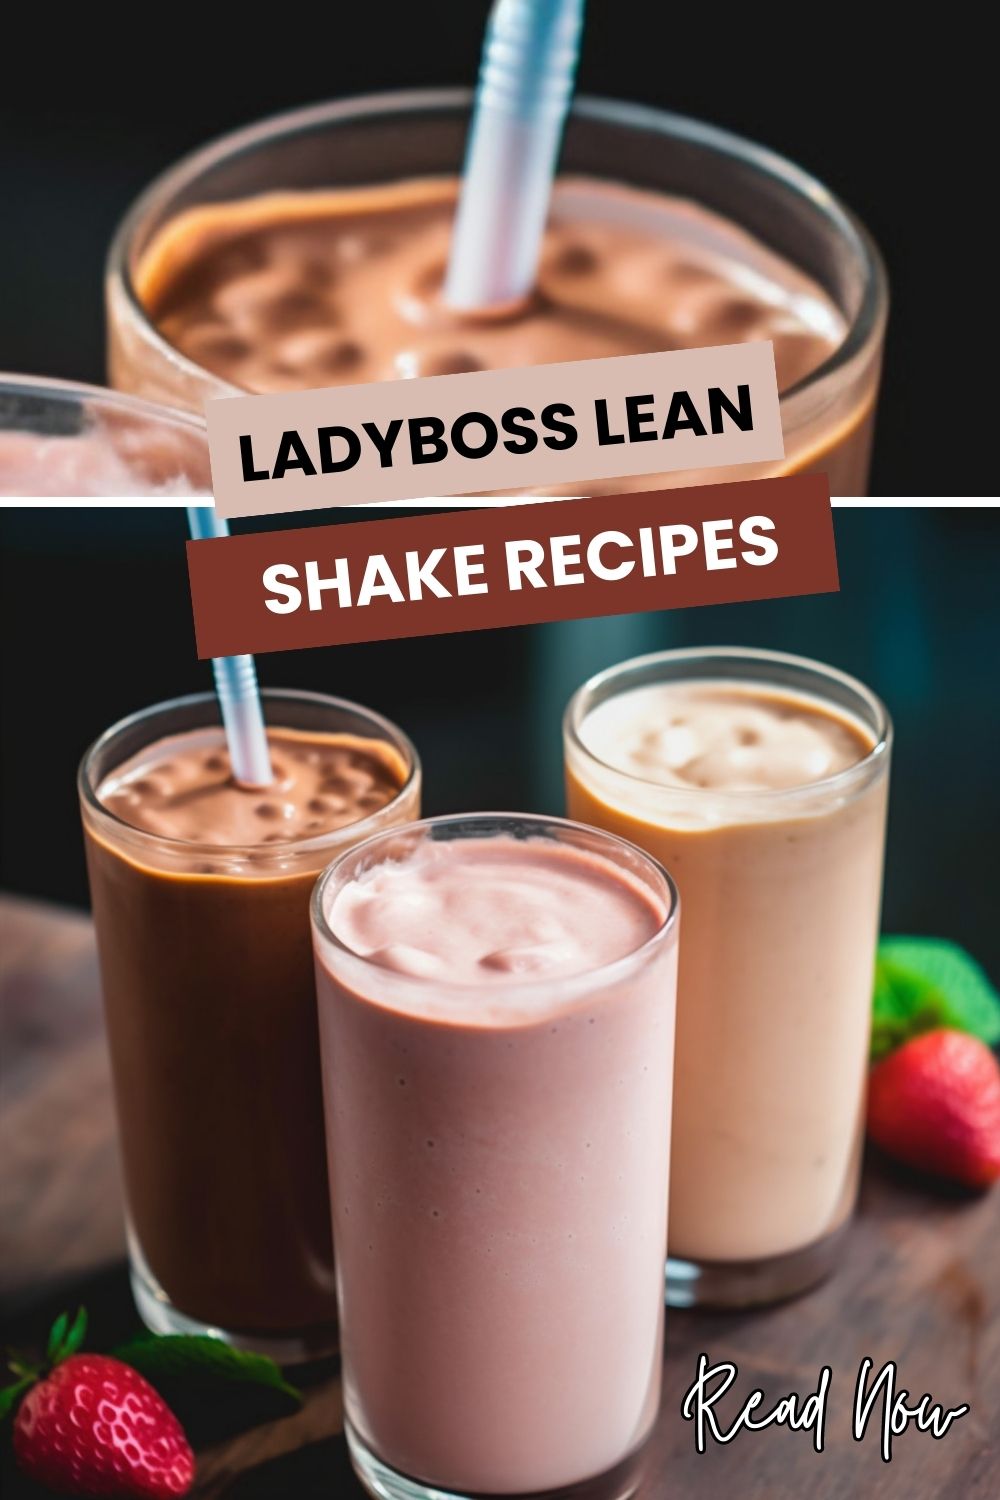 LadyBoss Lean Shake Recipes